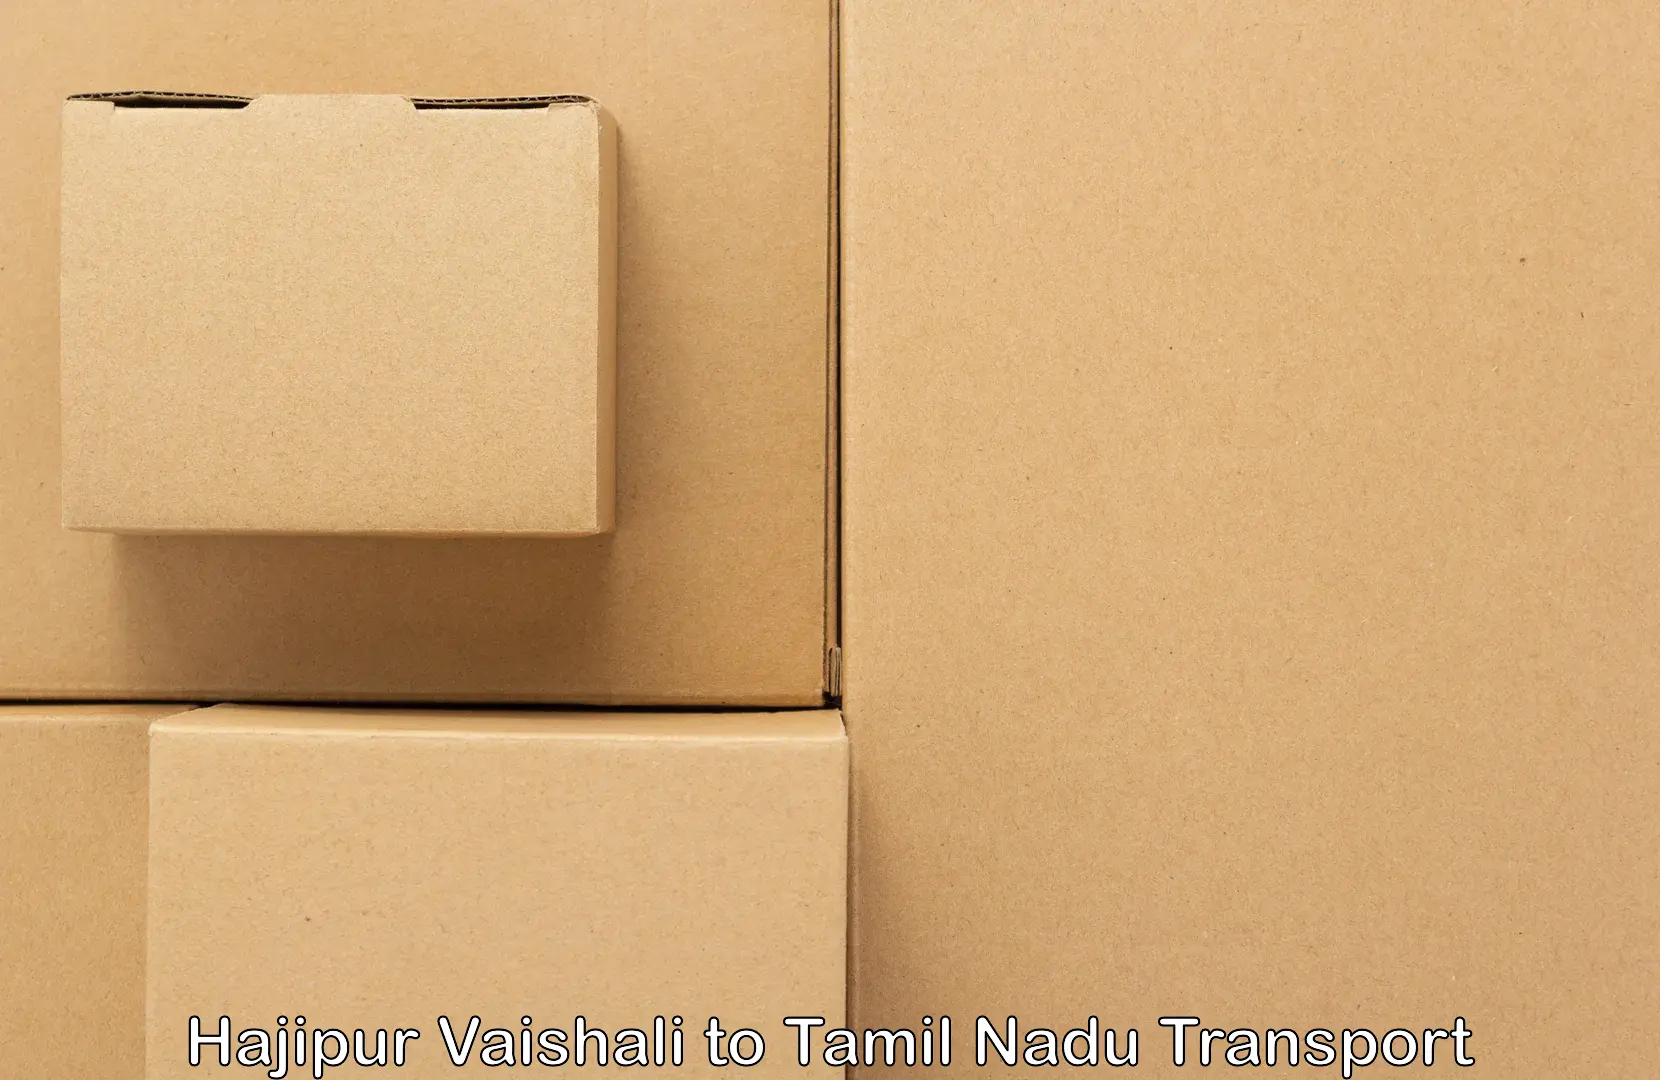 Delivery service Hajipur Vaishali to Villupuram